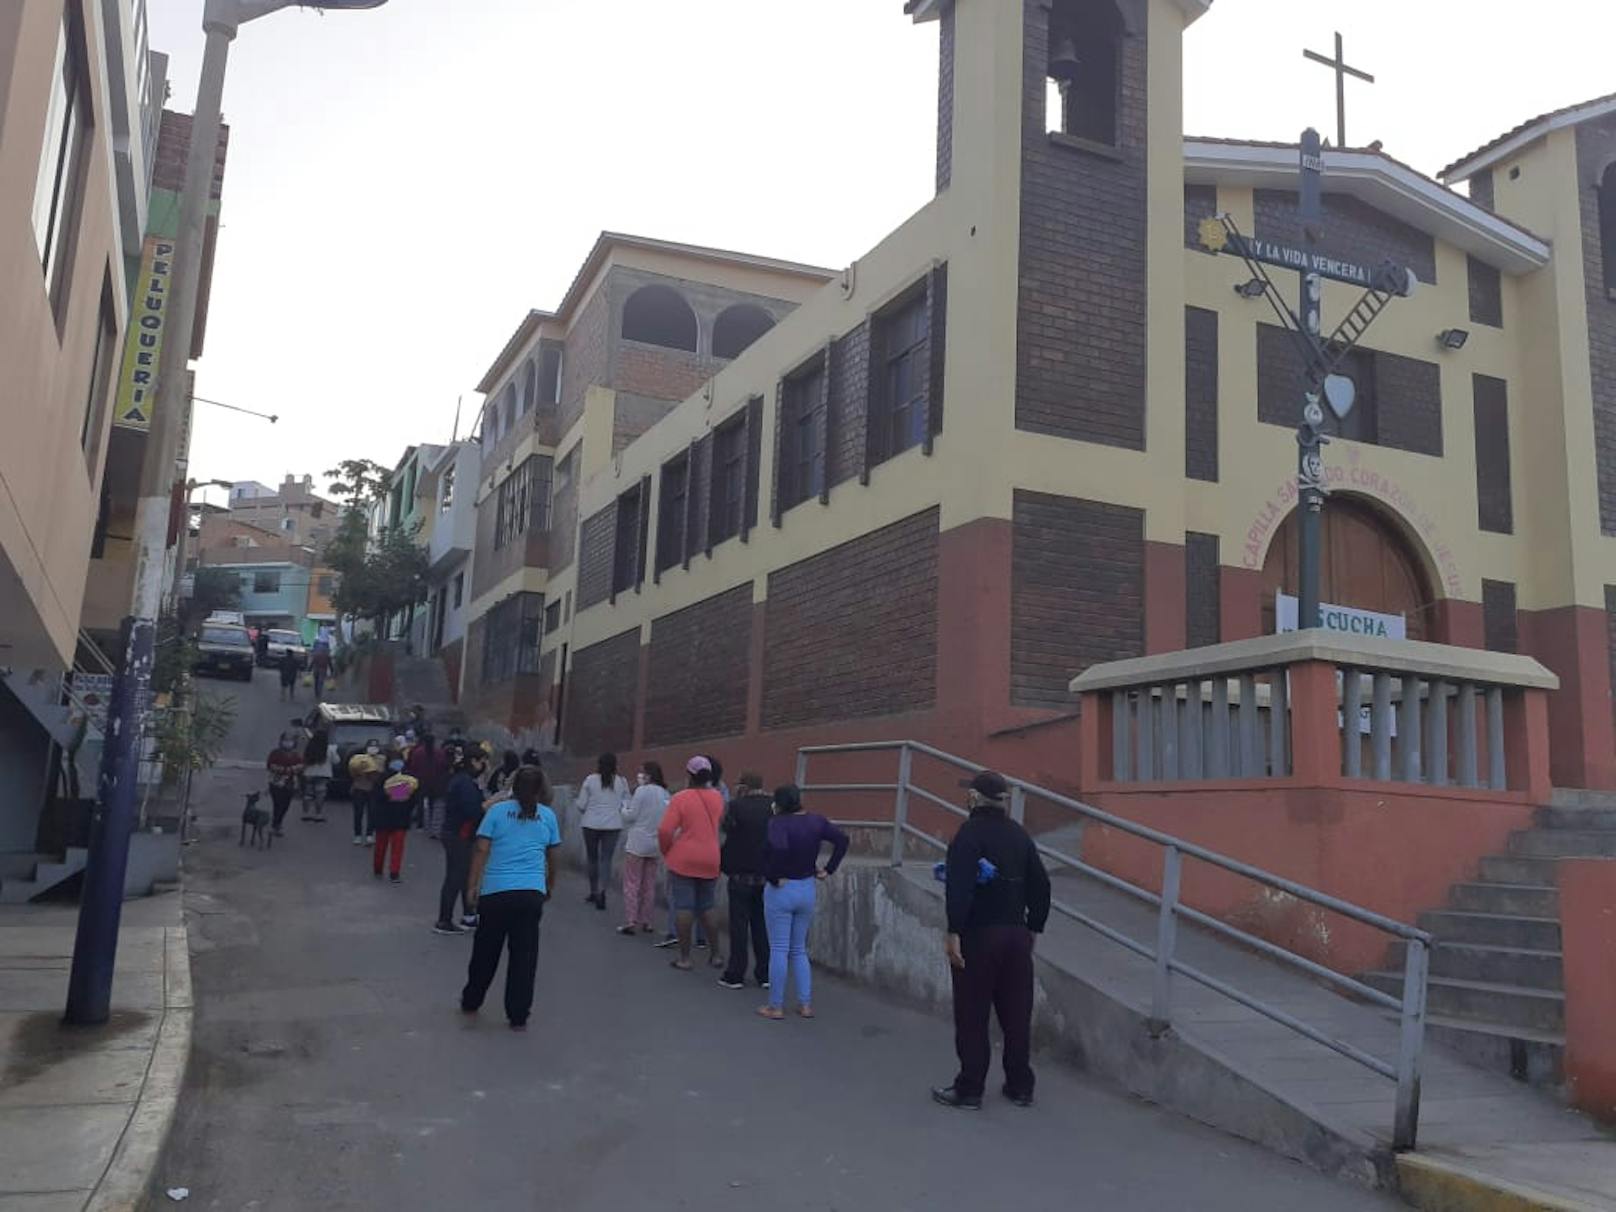 Coronakrise: Eindrücke aus Peru mit Pater Juan Goicochea Calderon